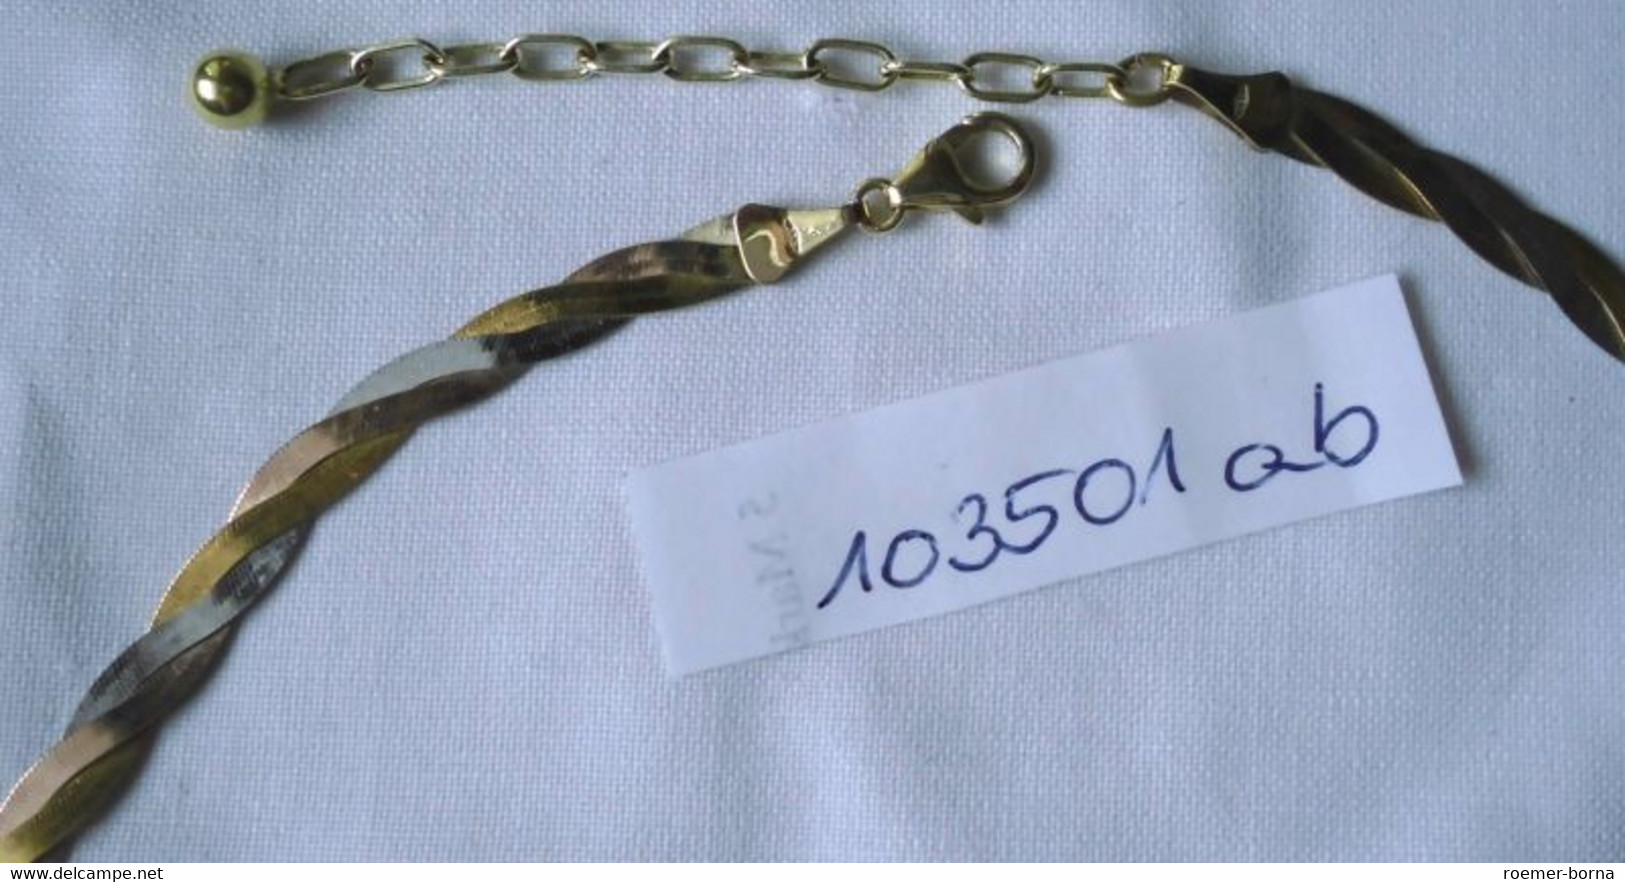 Wunderbare Flache Halskette 333er Gold Tricolour (103501) - Kettingen